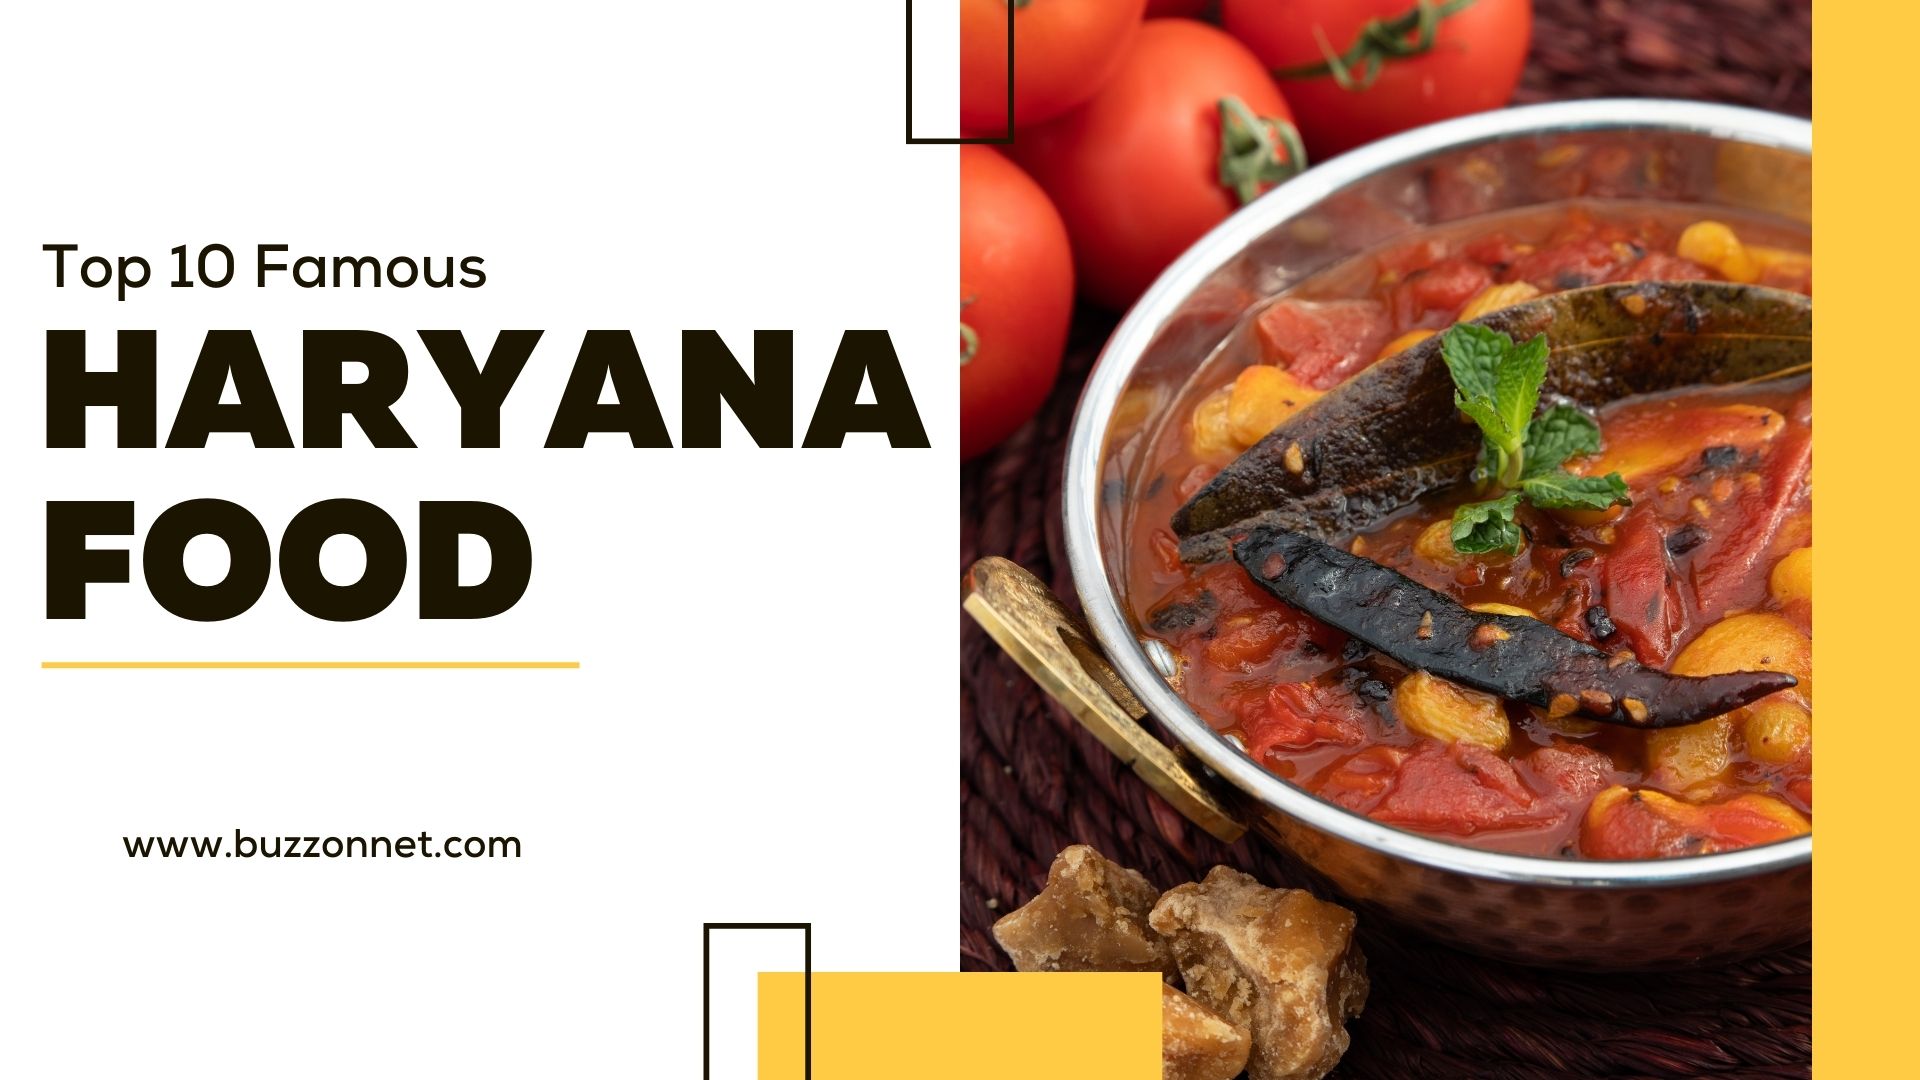 Top 10 Famous Haryana Food, Buzzonnet